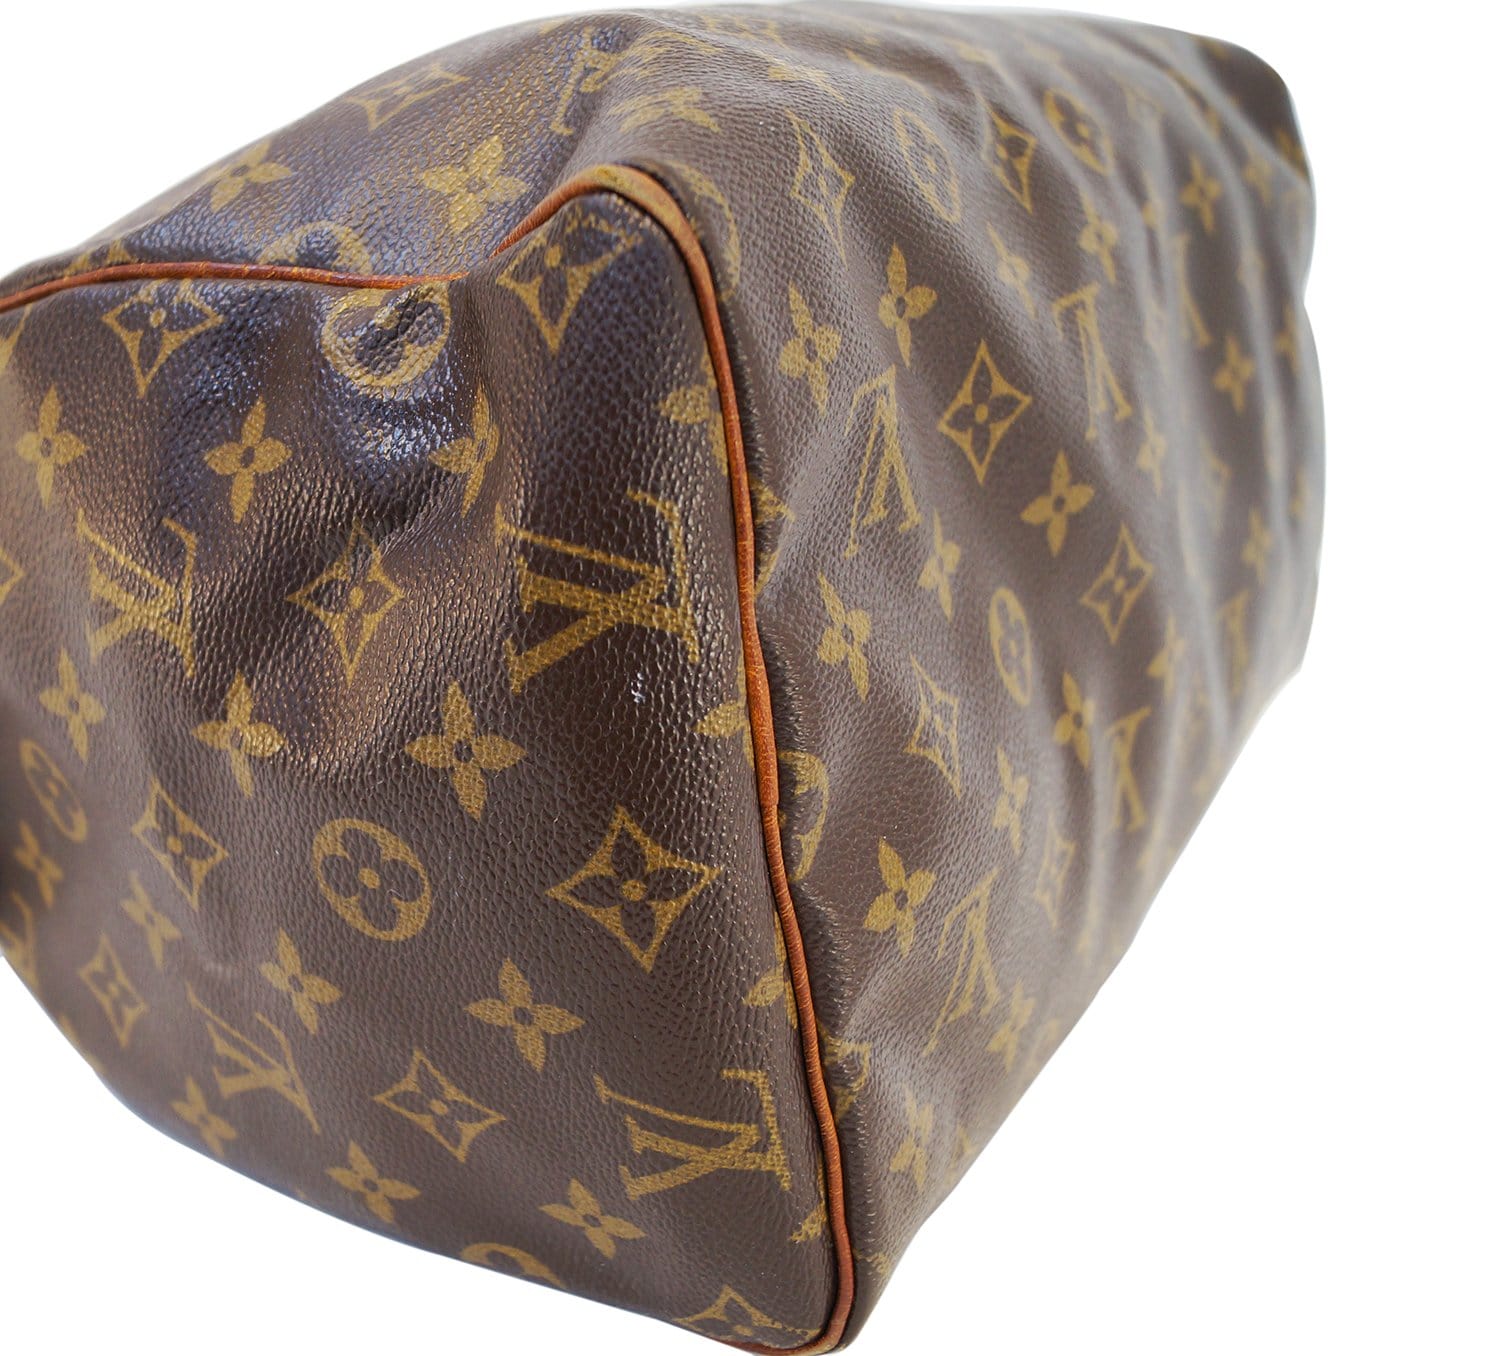 Louis Vuitton Speedy Handbag 397018